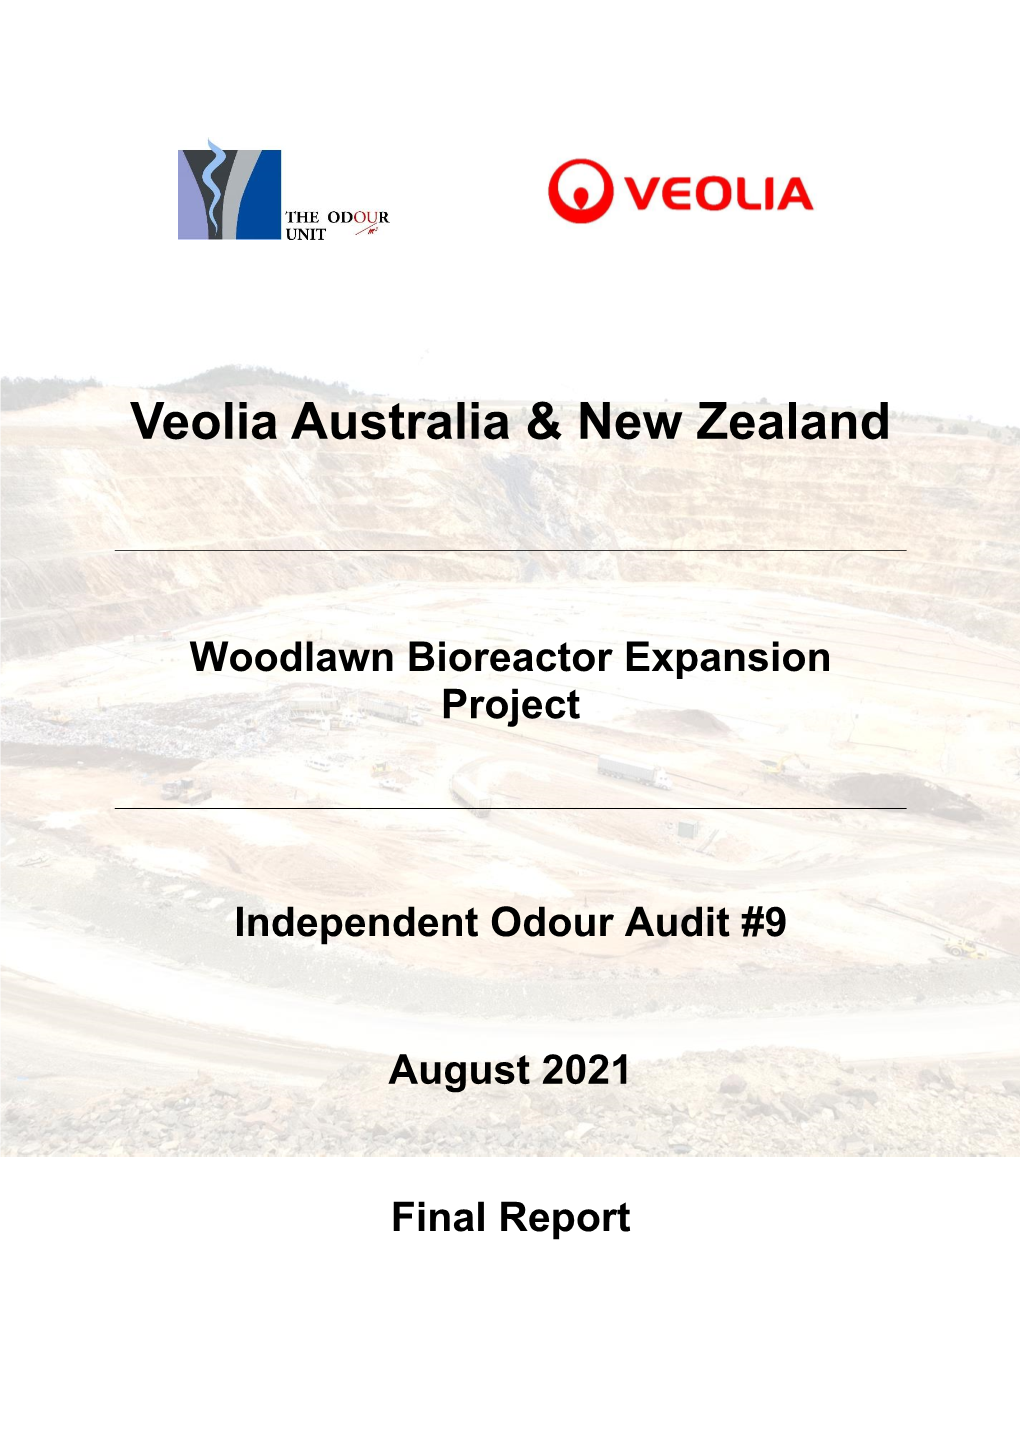 2021 Final Odour Audit Report